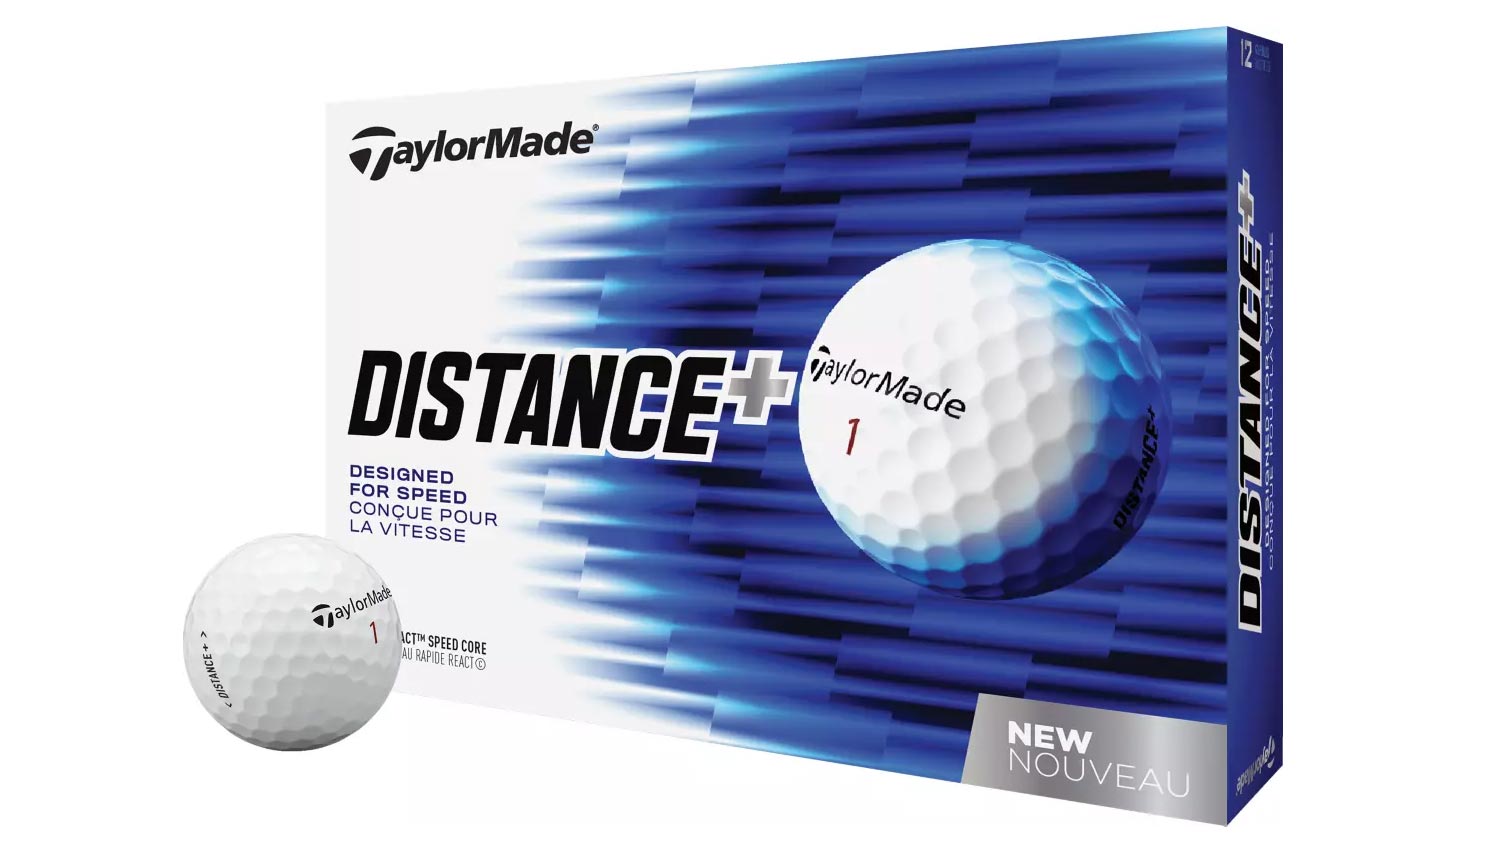 13 best value golf balls to improve distance, feel: Golf Ball Buyer's Guide